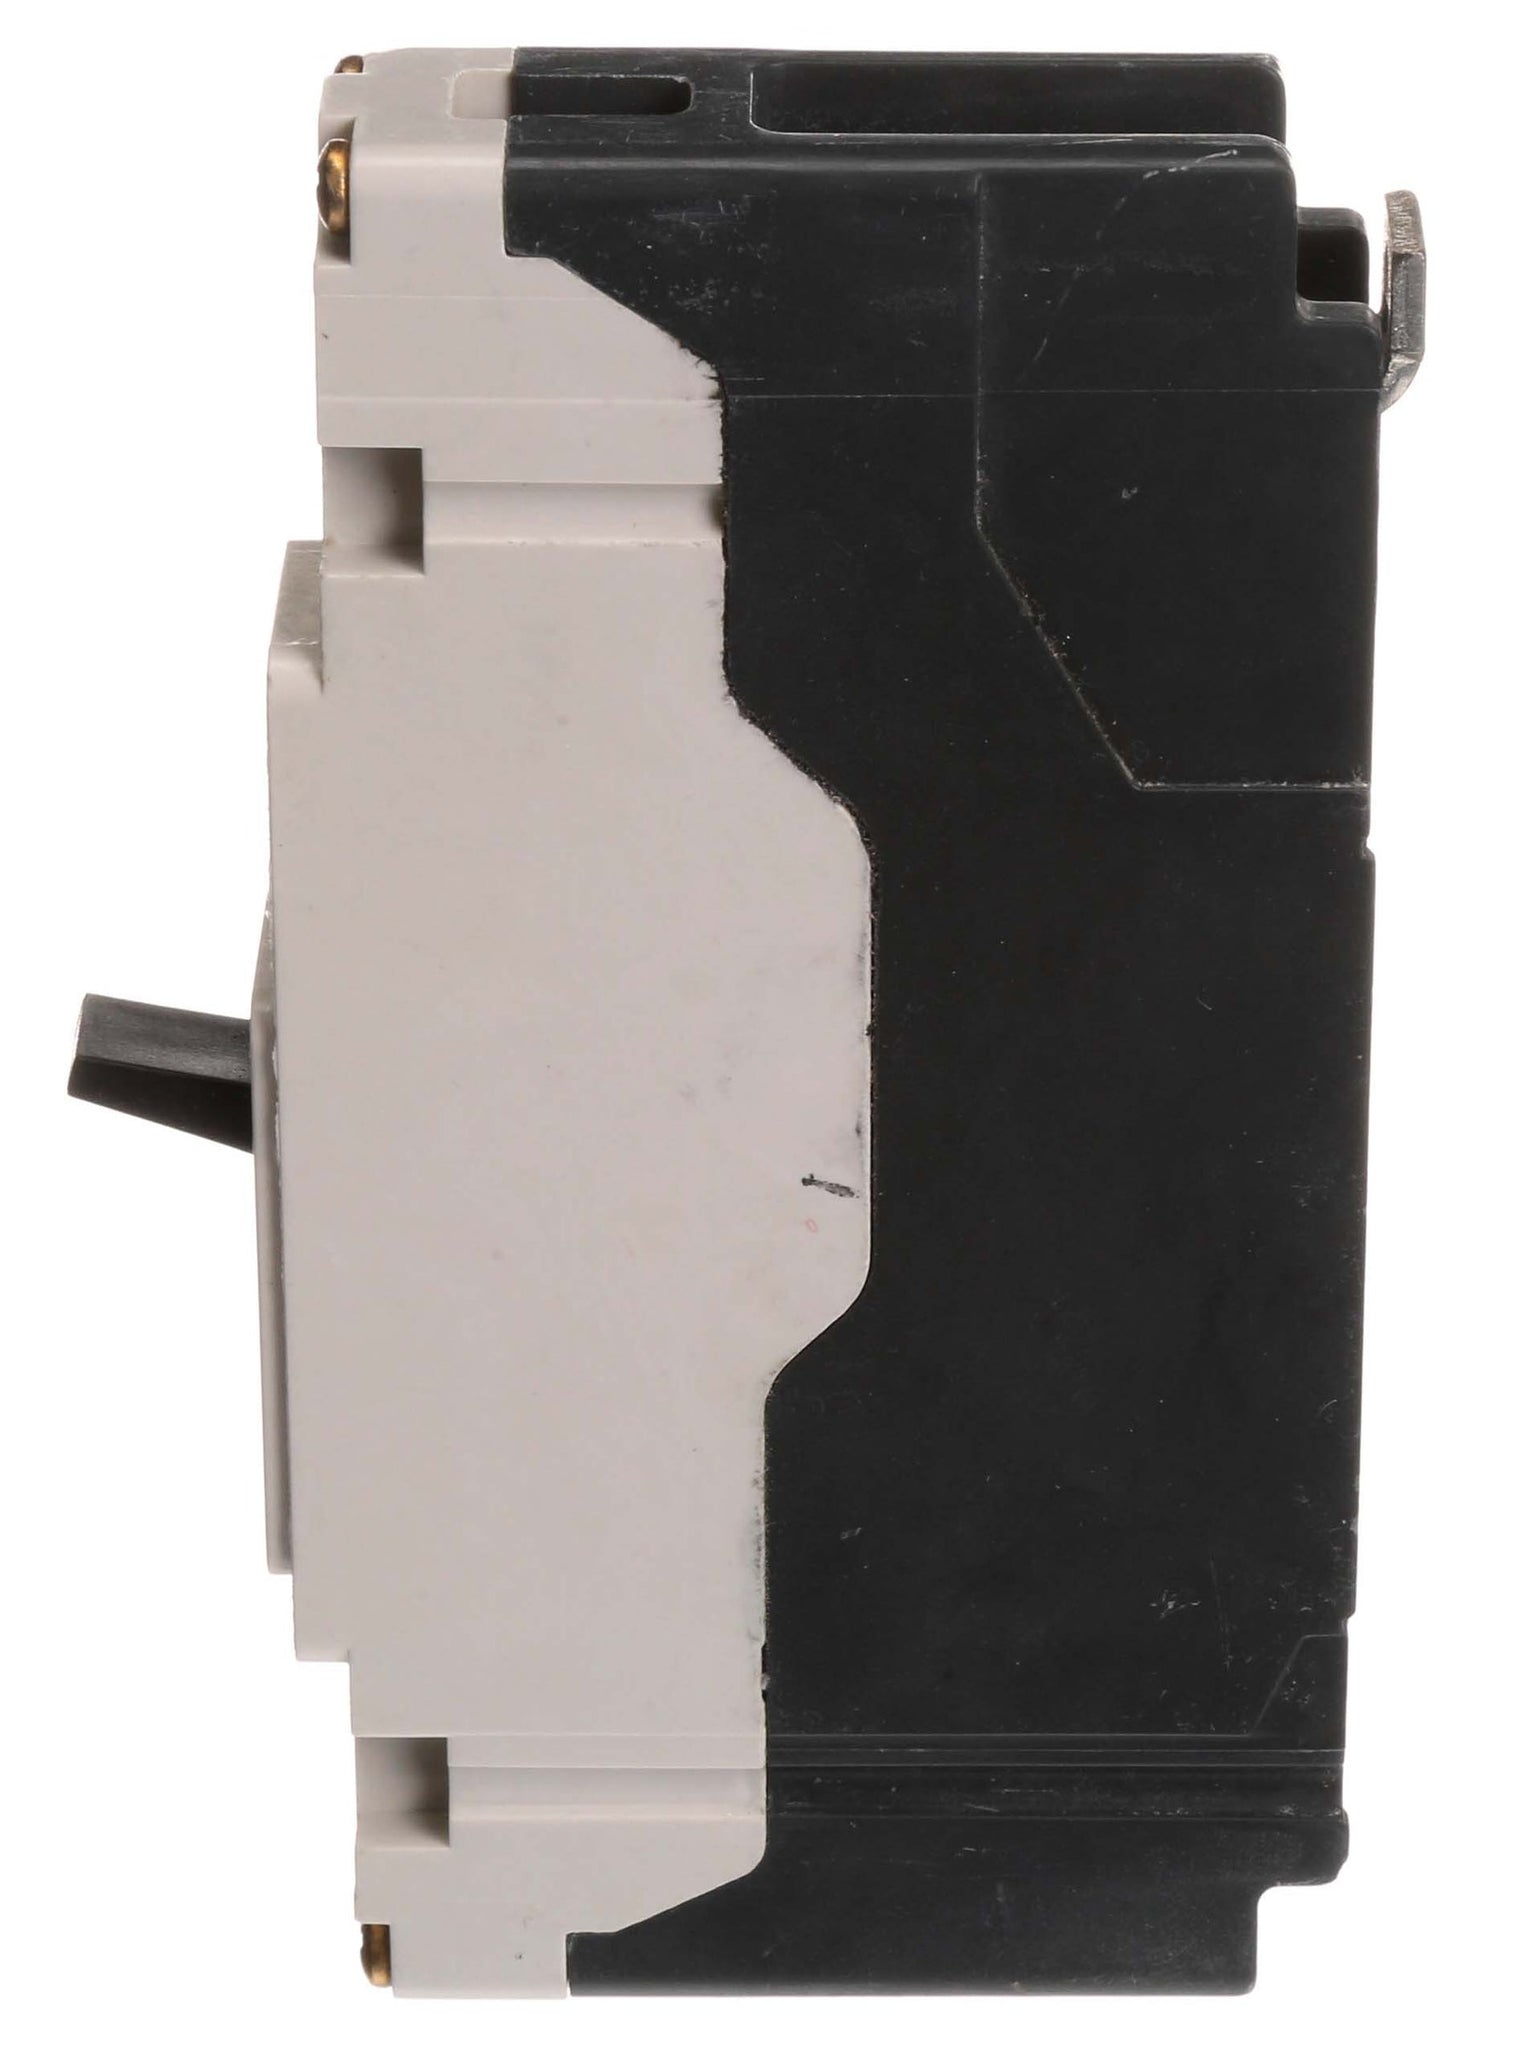 NEB1B070B - Siemens - Molded Case